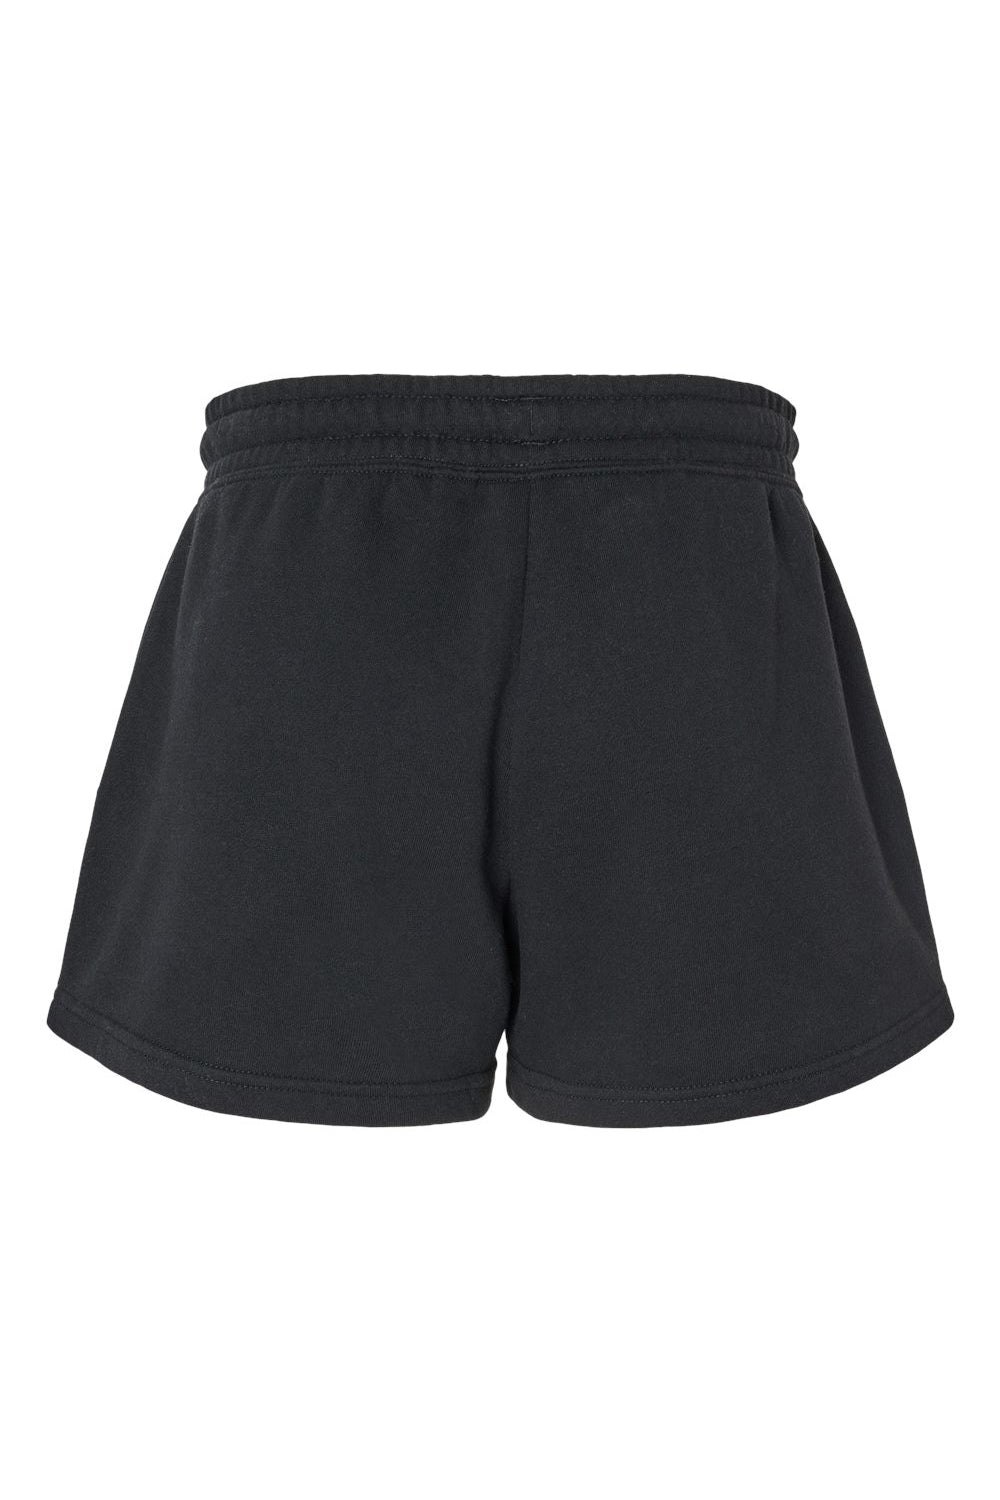 Independent Trading Co. PRM20SRT Womens California Wave Wash Fleece Shorts w/ Pockets Black Flat Back